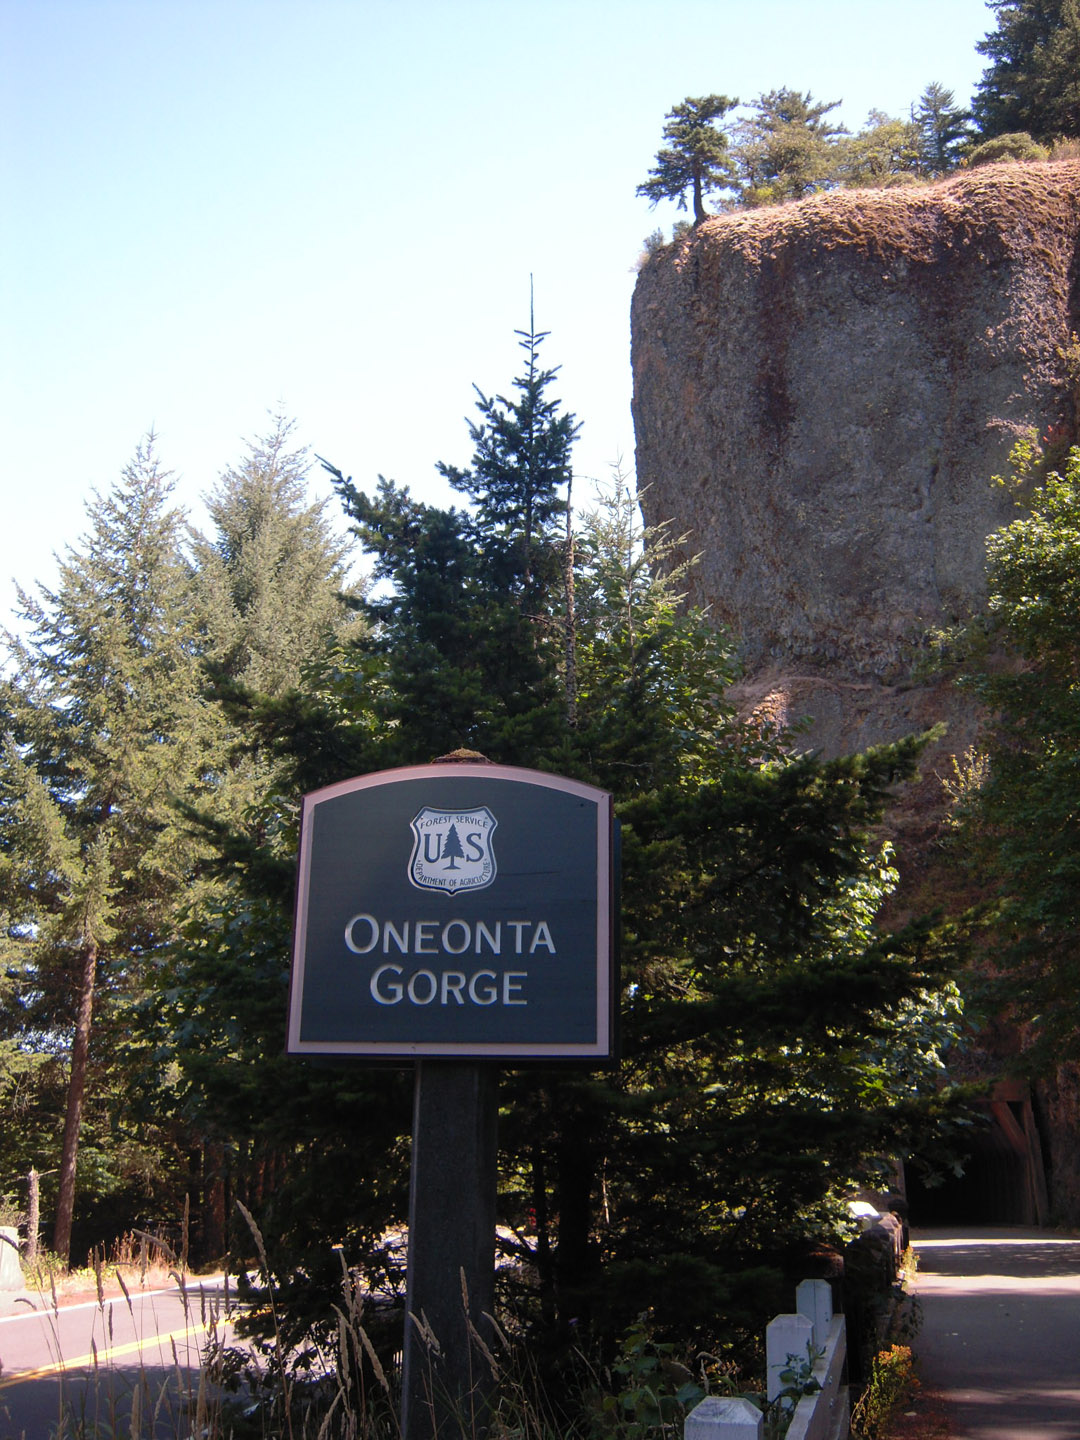 The Oneonta Gorge trailhead.